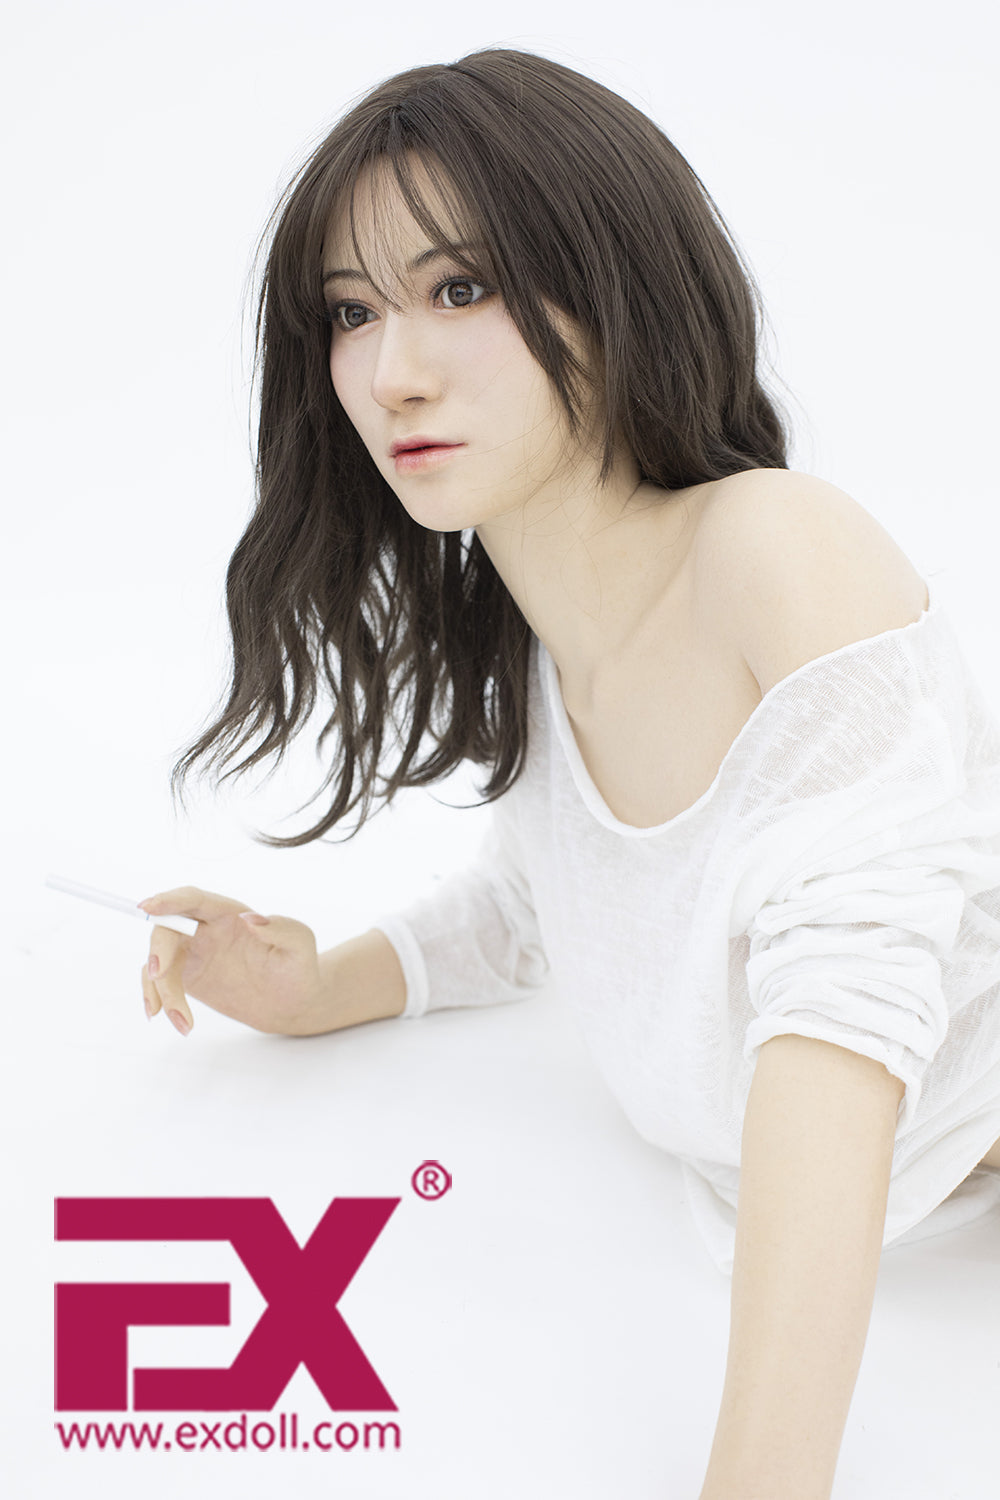 EX Doll Clone Series 160 cm A Silicone - Chun Yi | Buy Sex Dolls at DOLLS ACTUALLY